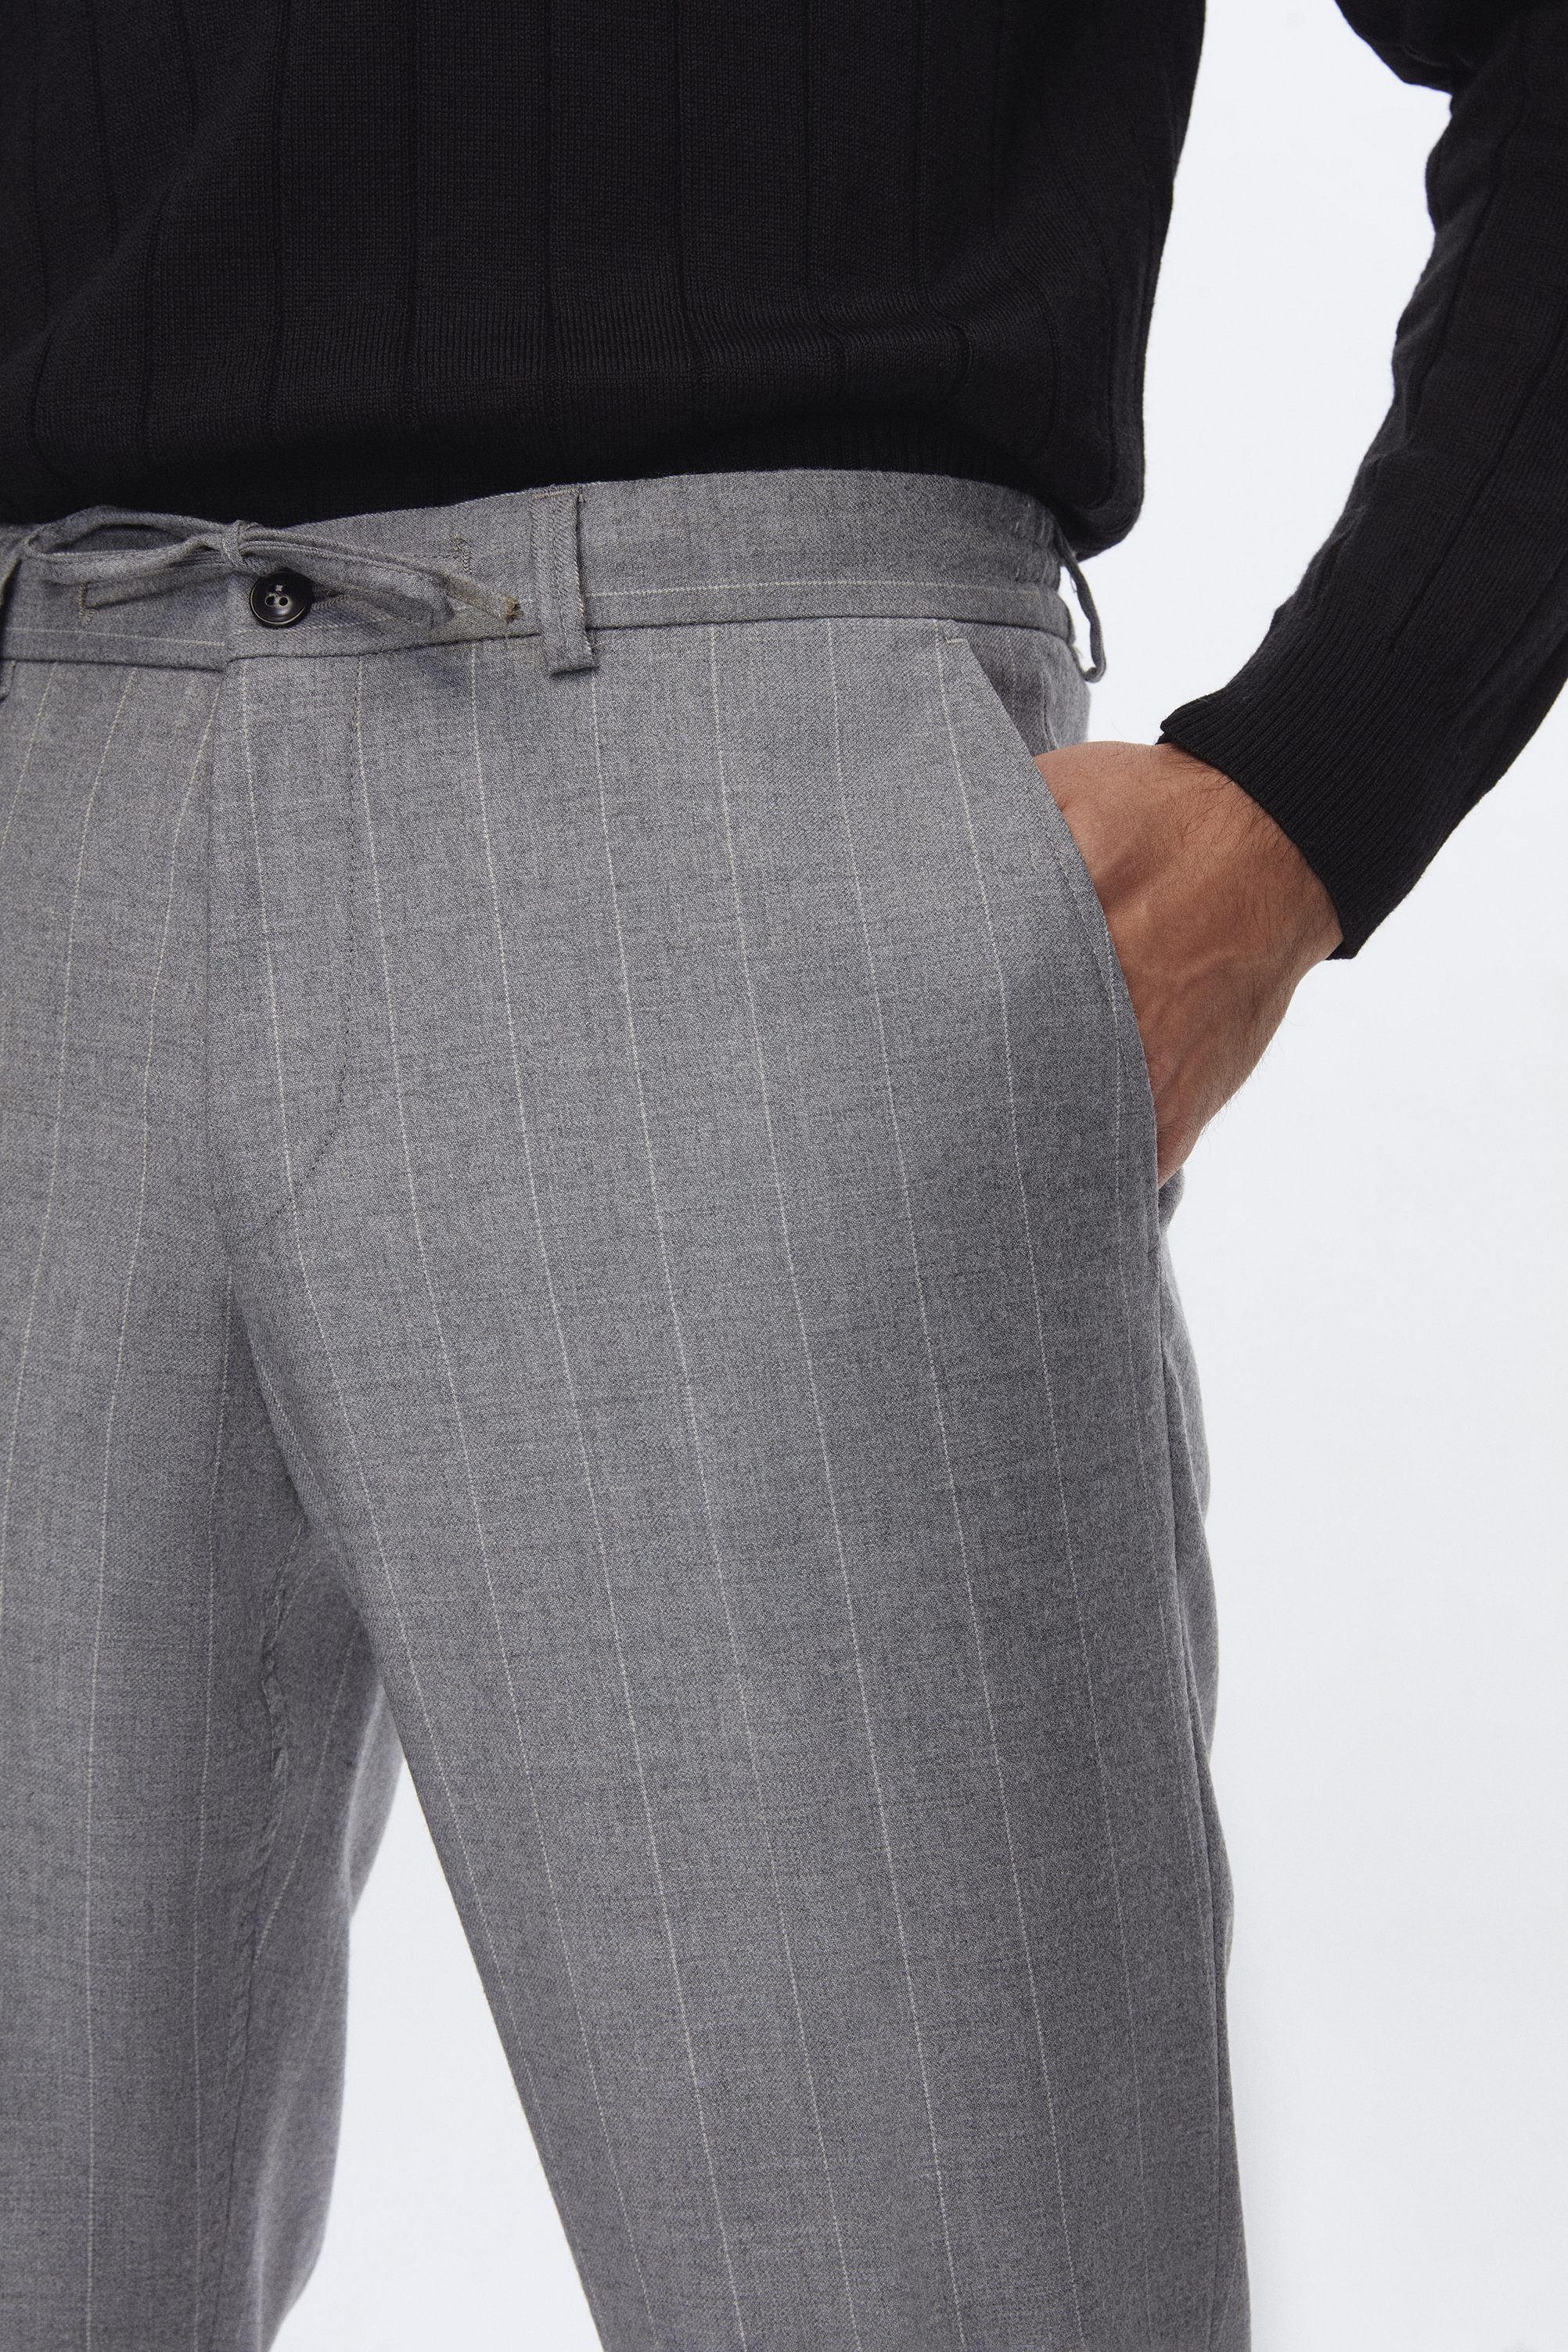 Damat Tween Damat Slim Fit Gri Desenli %100 Yün Chino Pantolon. 4